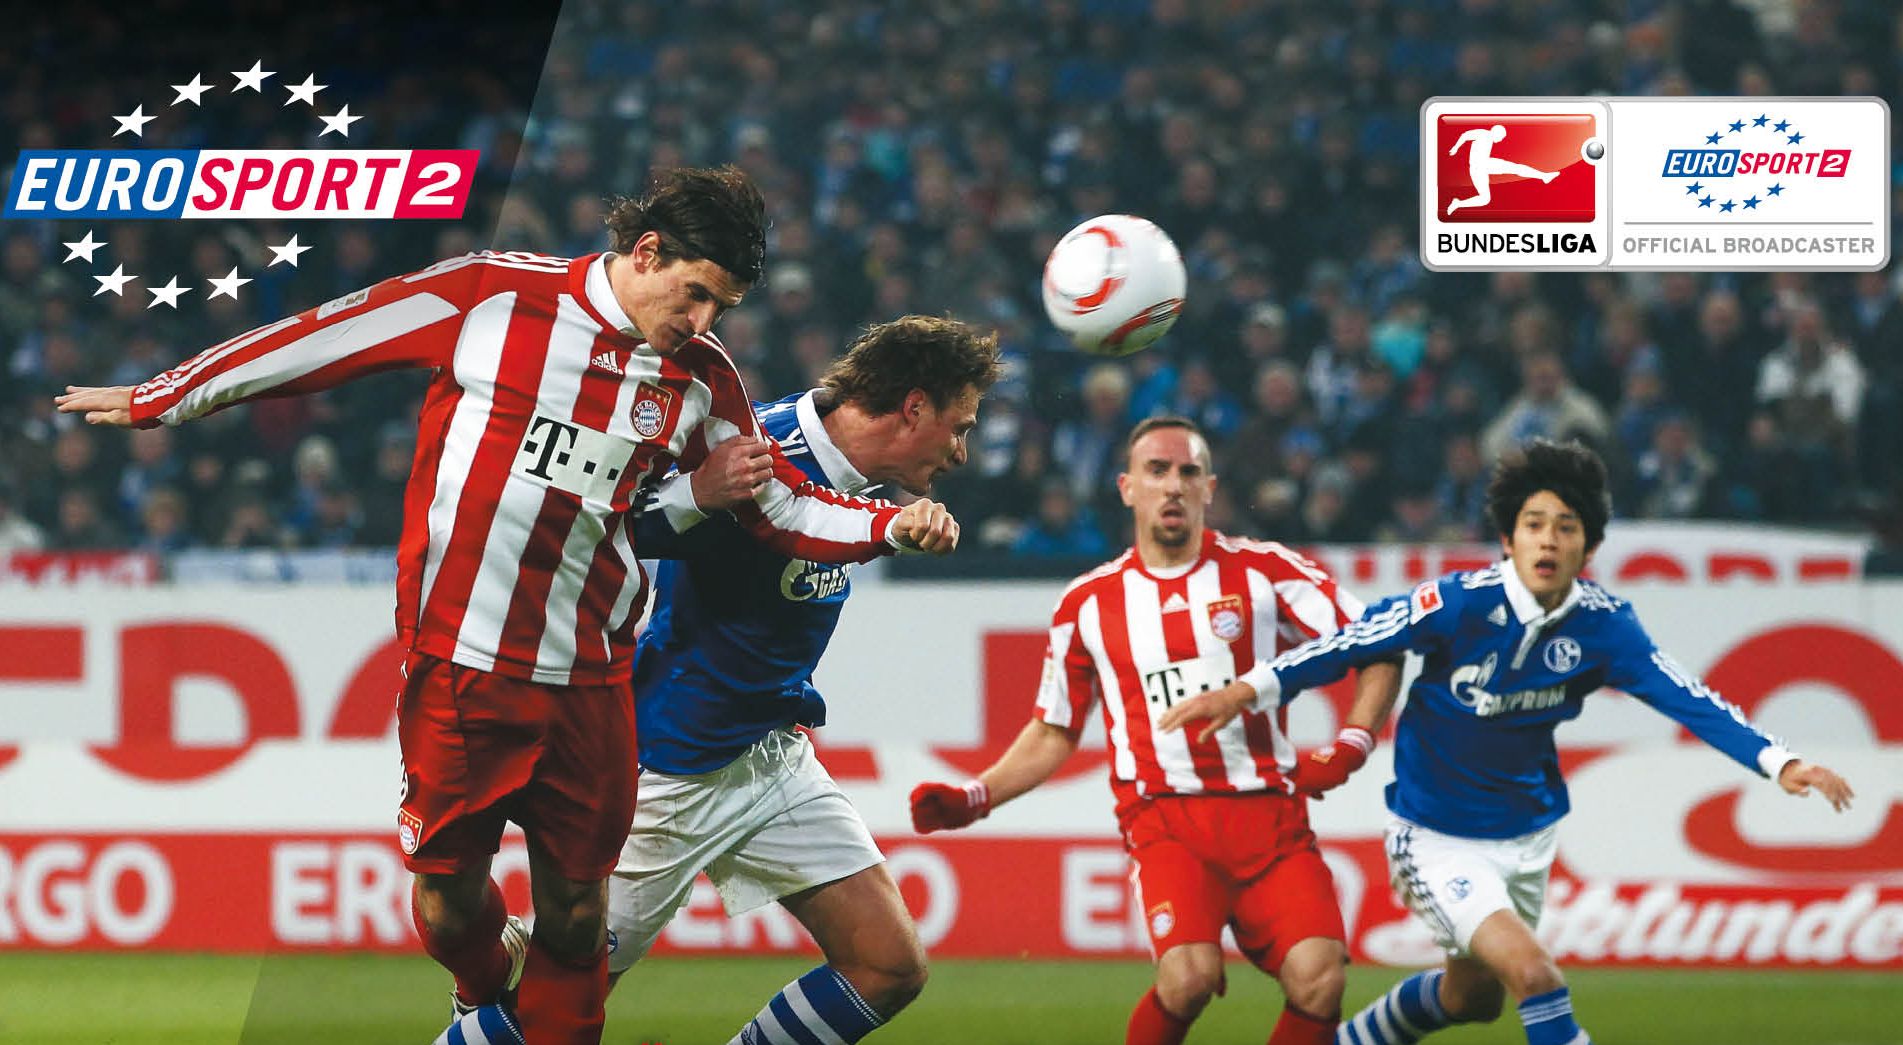 Eurosport 2 / Bundesliga